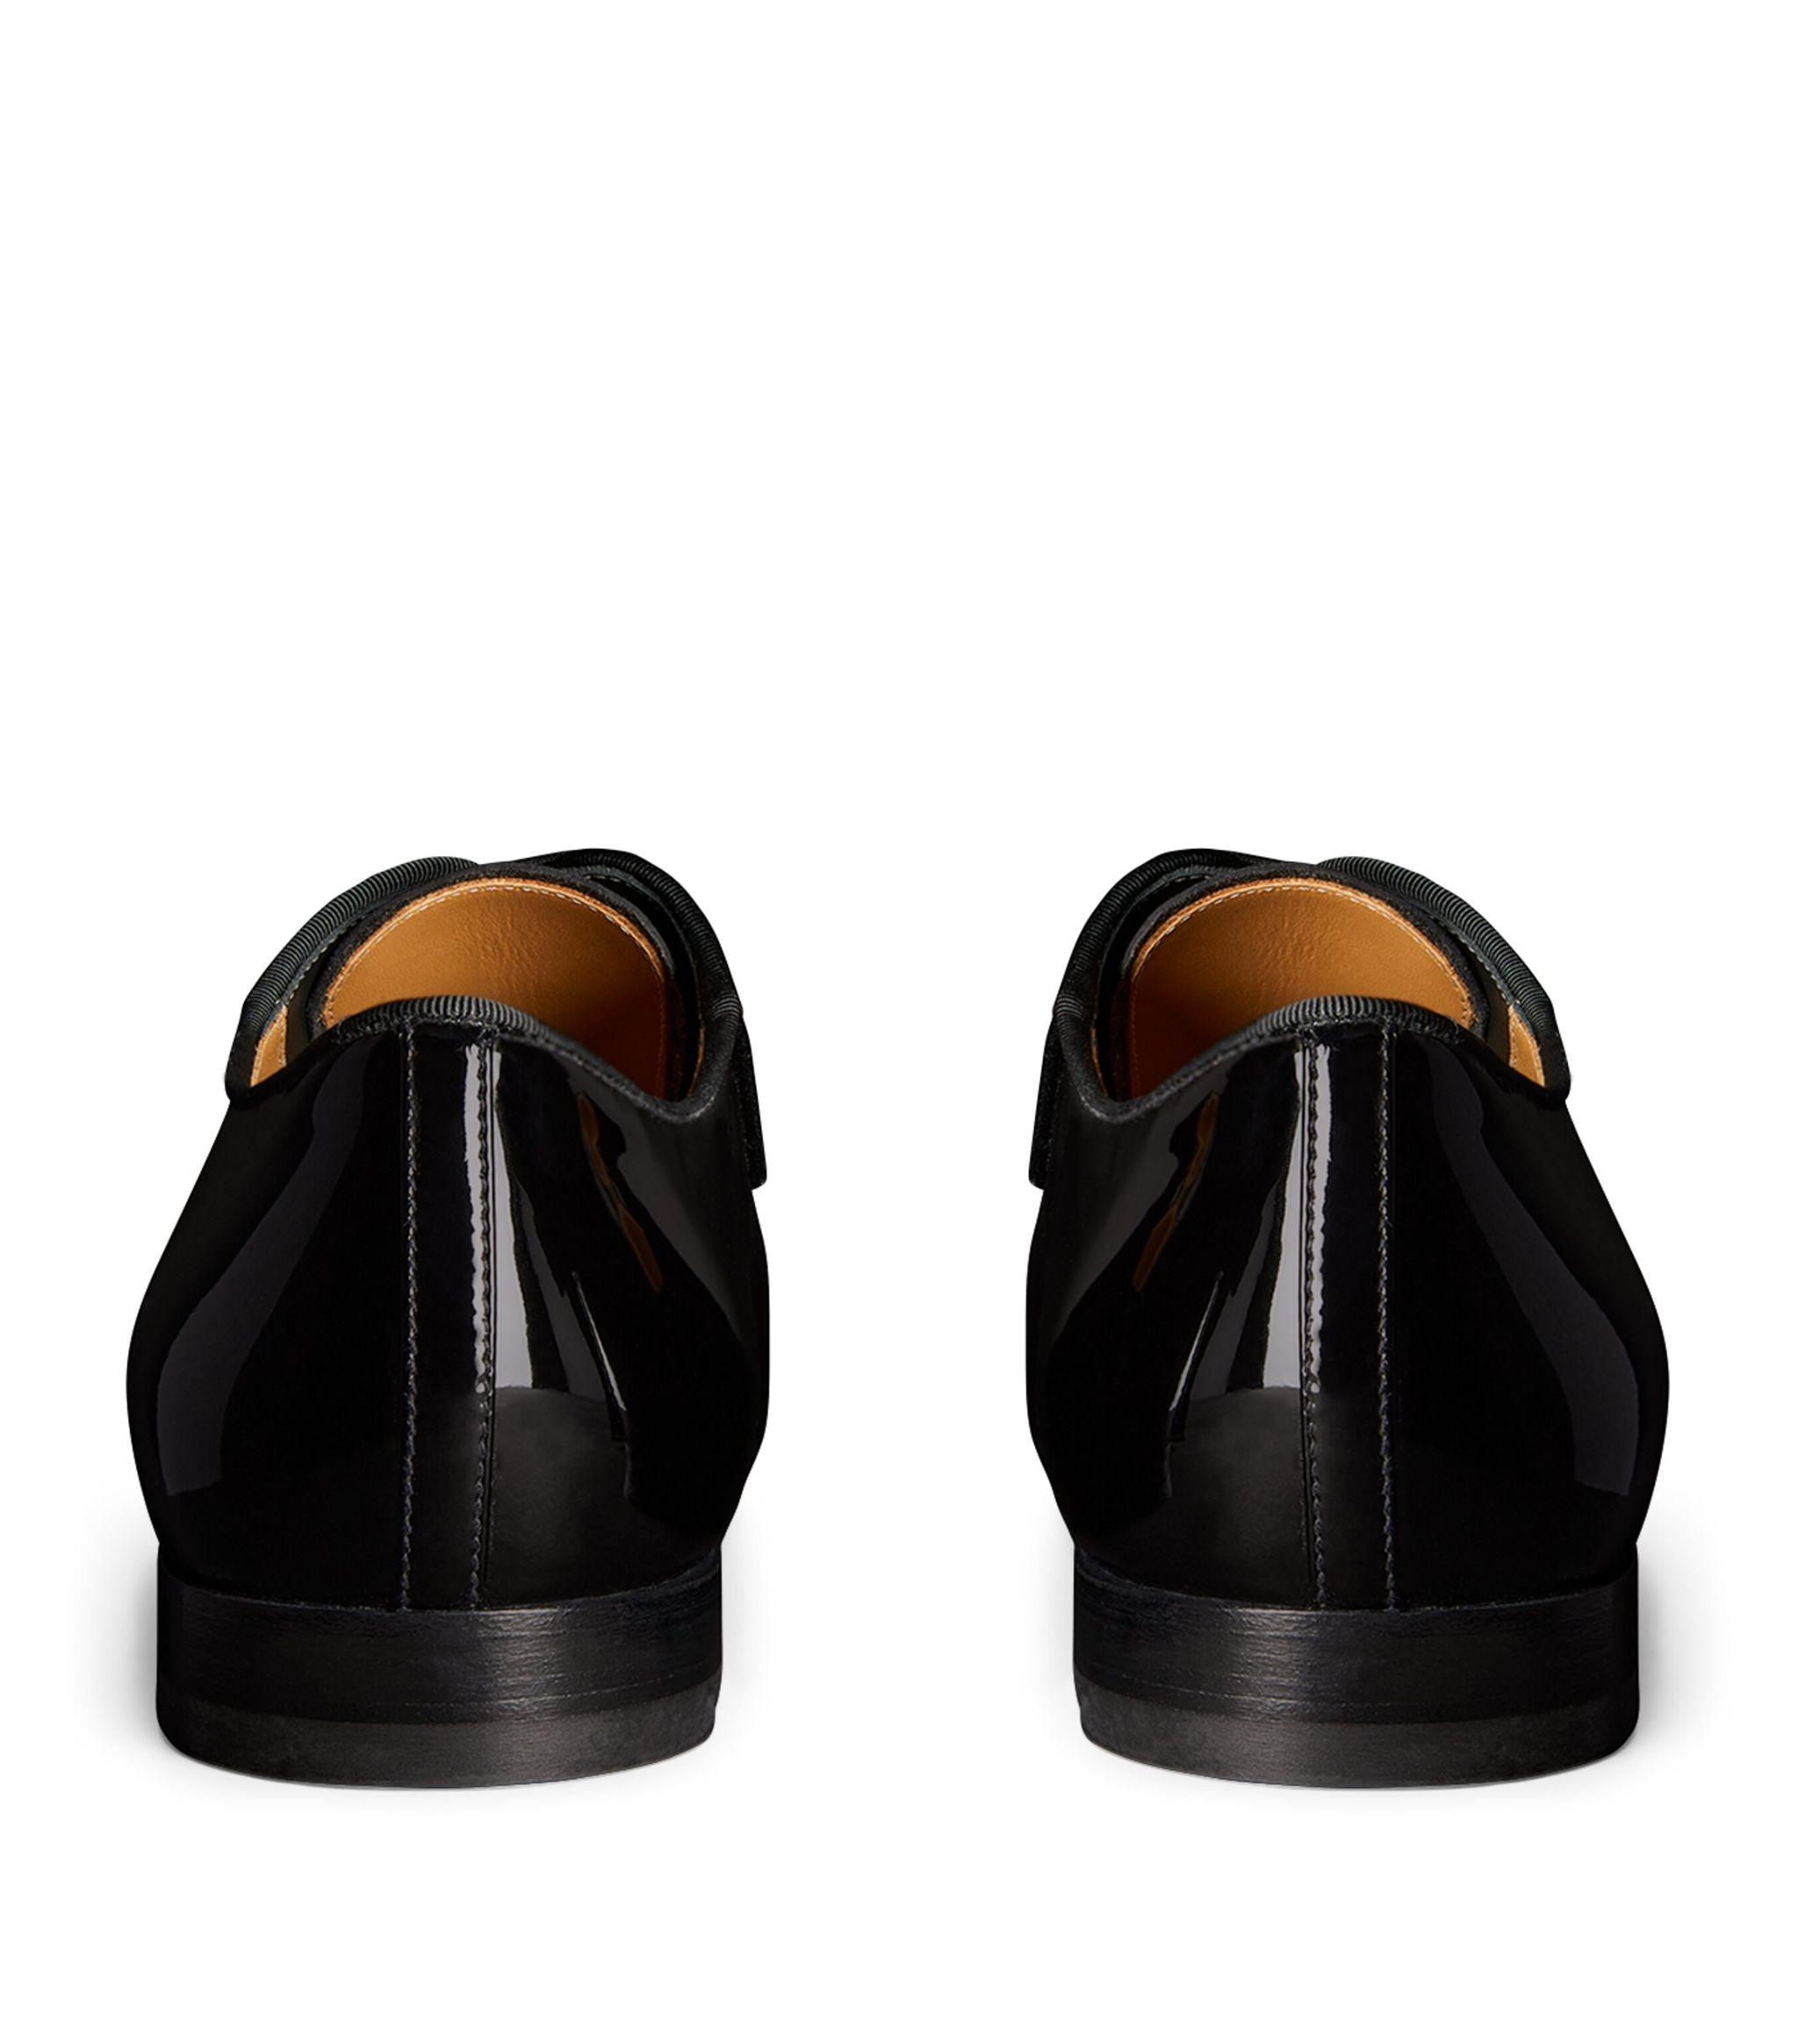 Christian Louboutin Men's Lafitte Leather Oxford Shoes